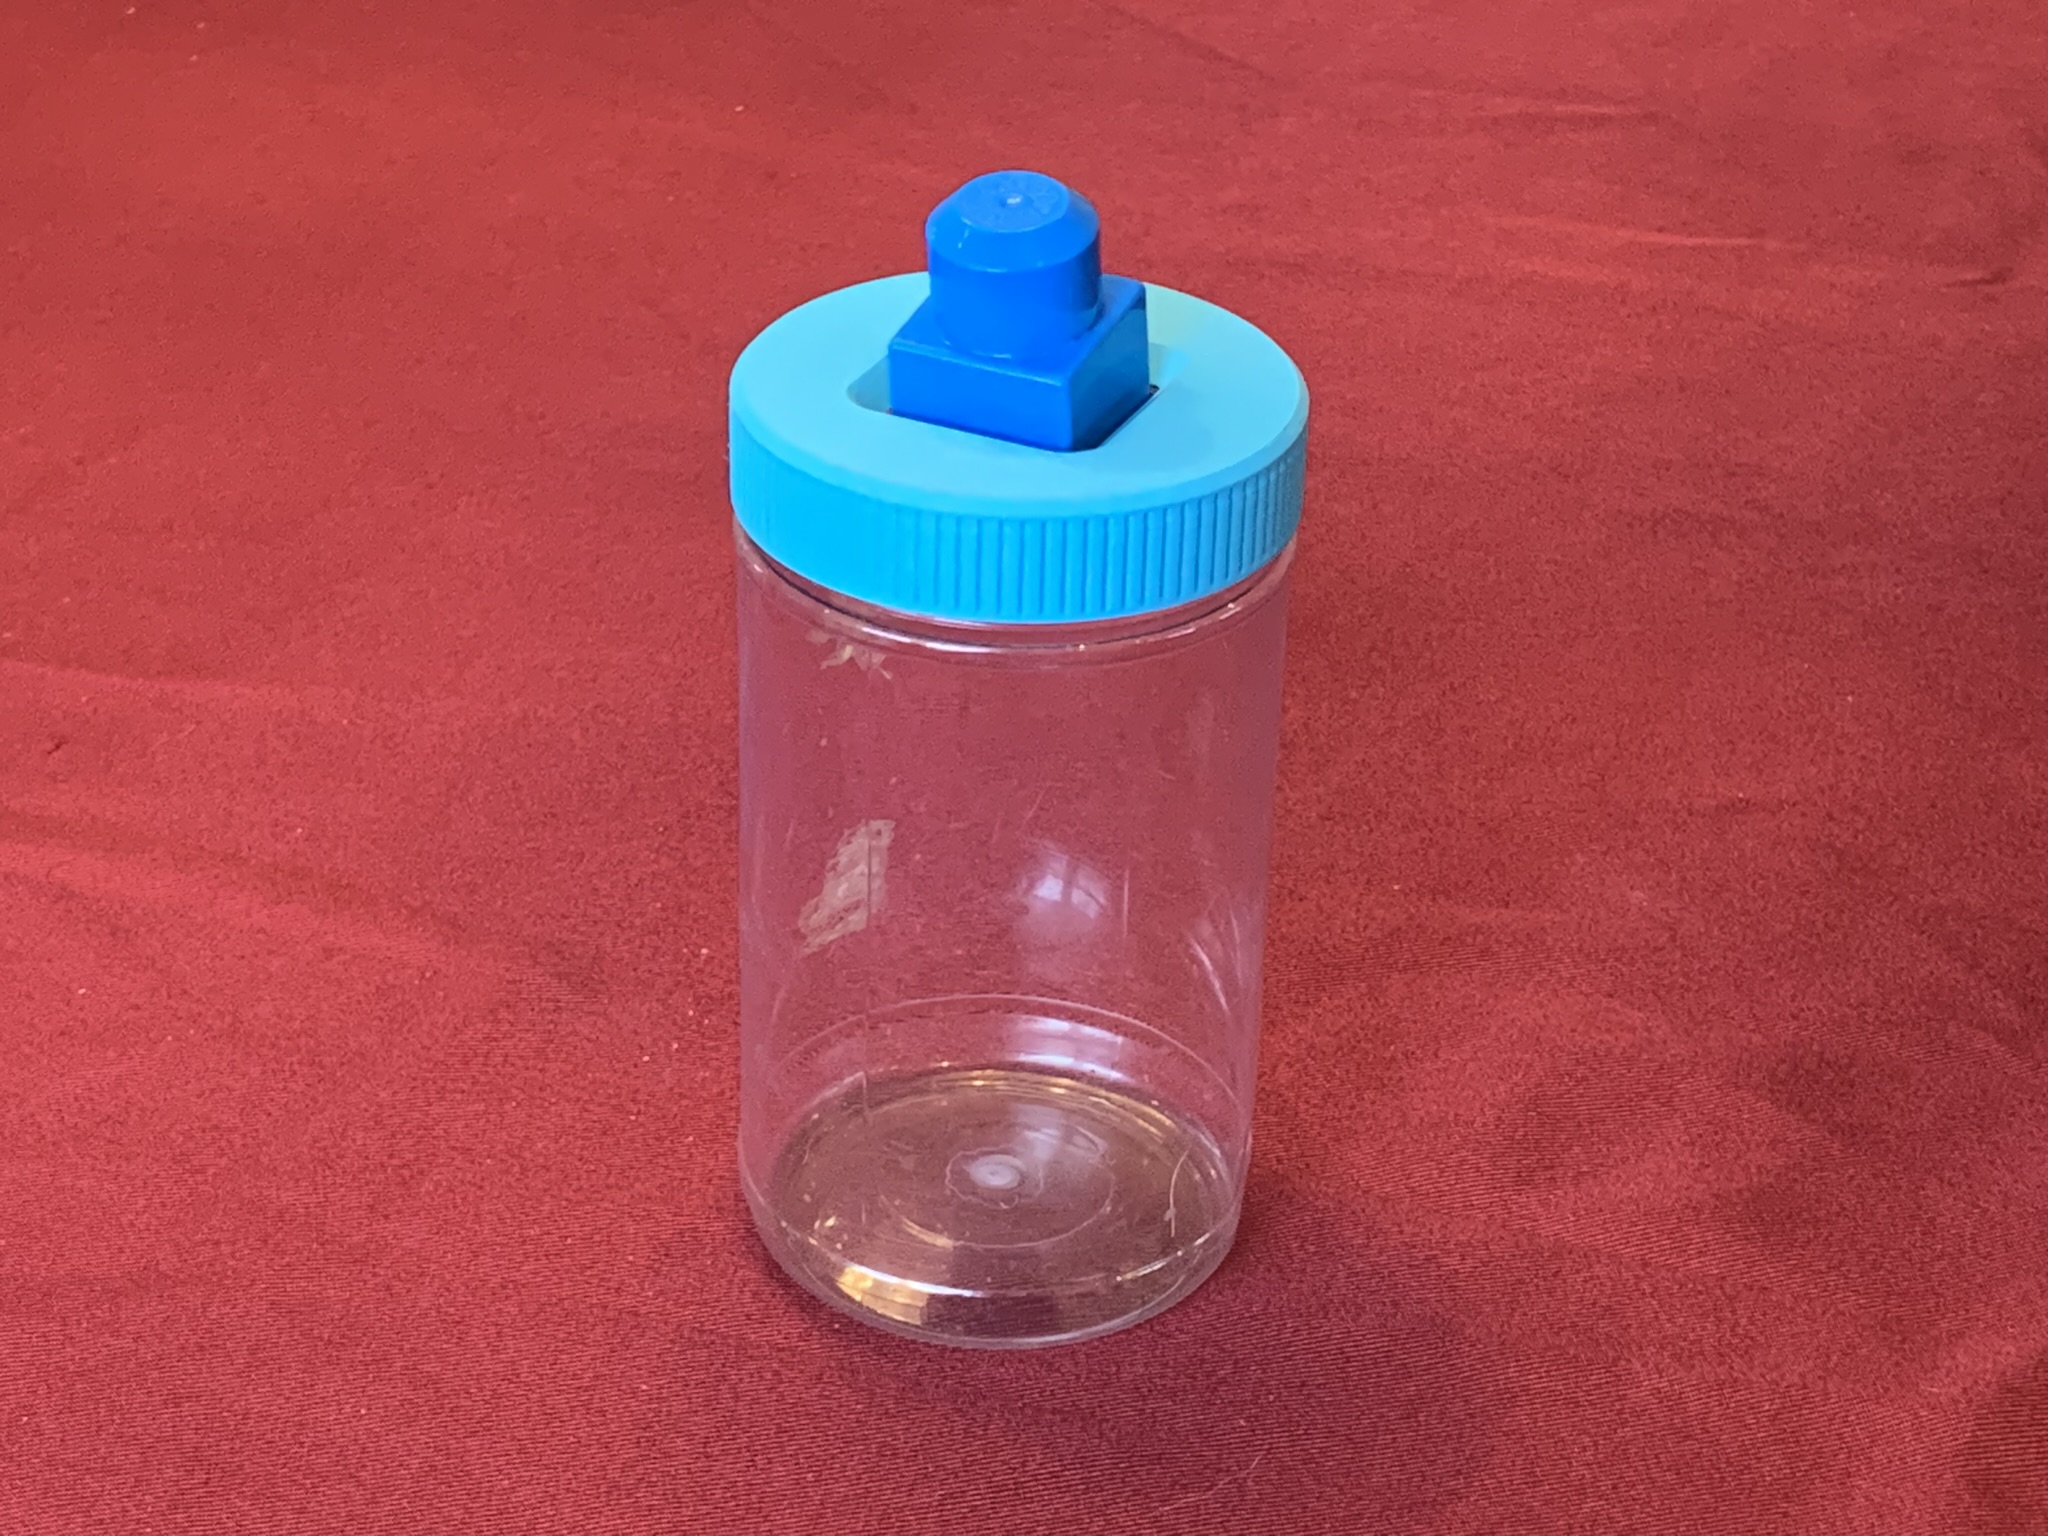 Duplo Block Dexterity Toy (Montessori Style), Peanut Butter Jar Mod